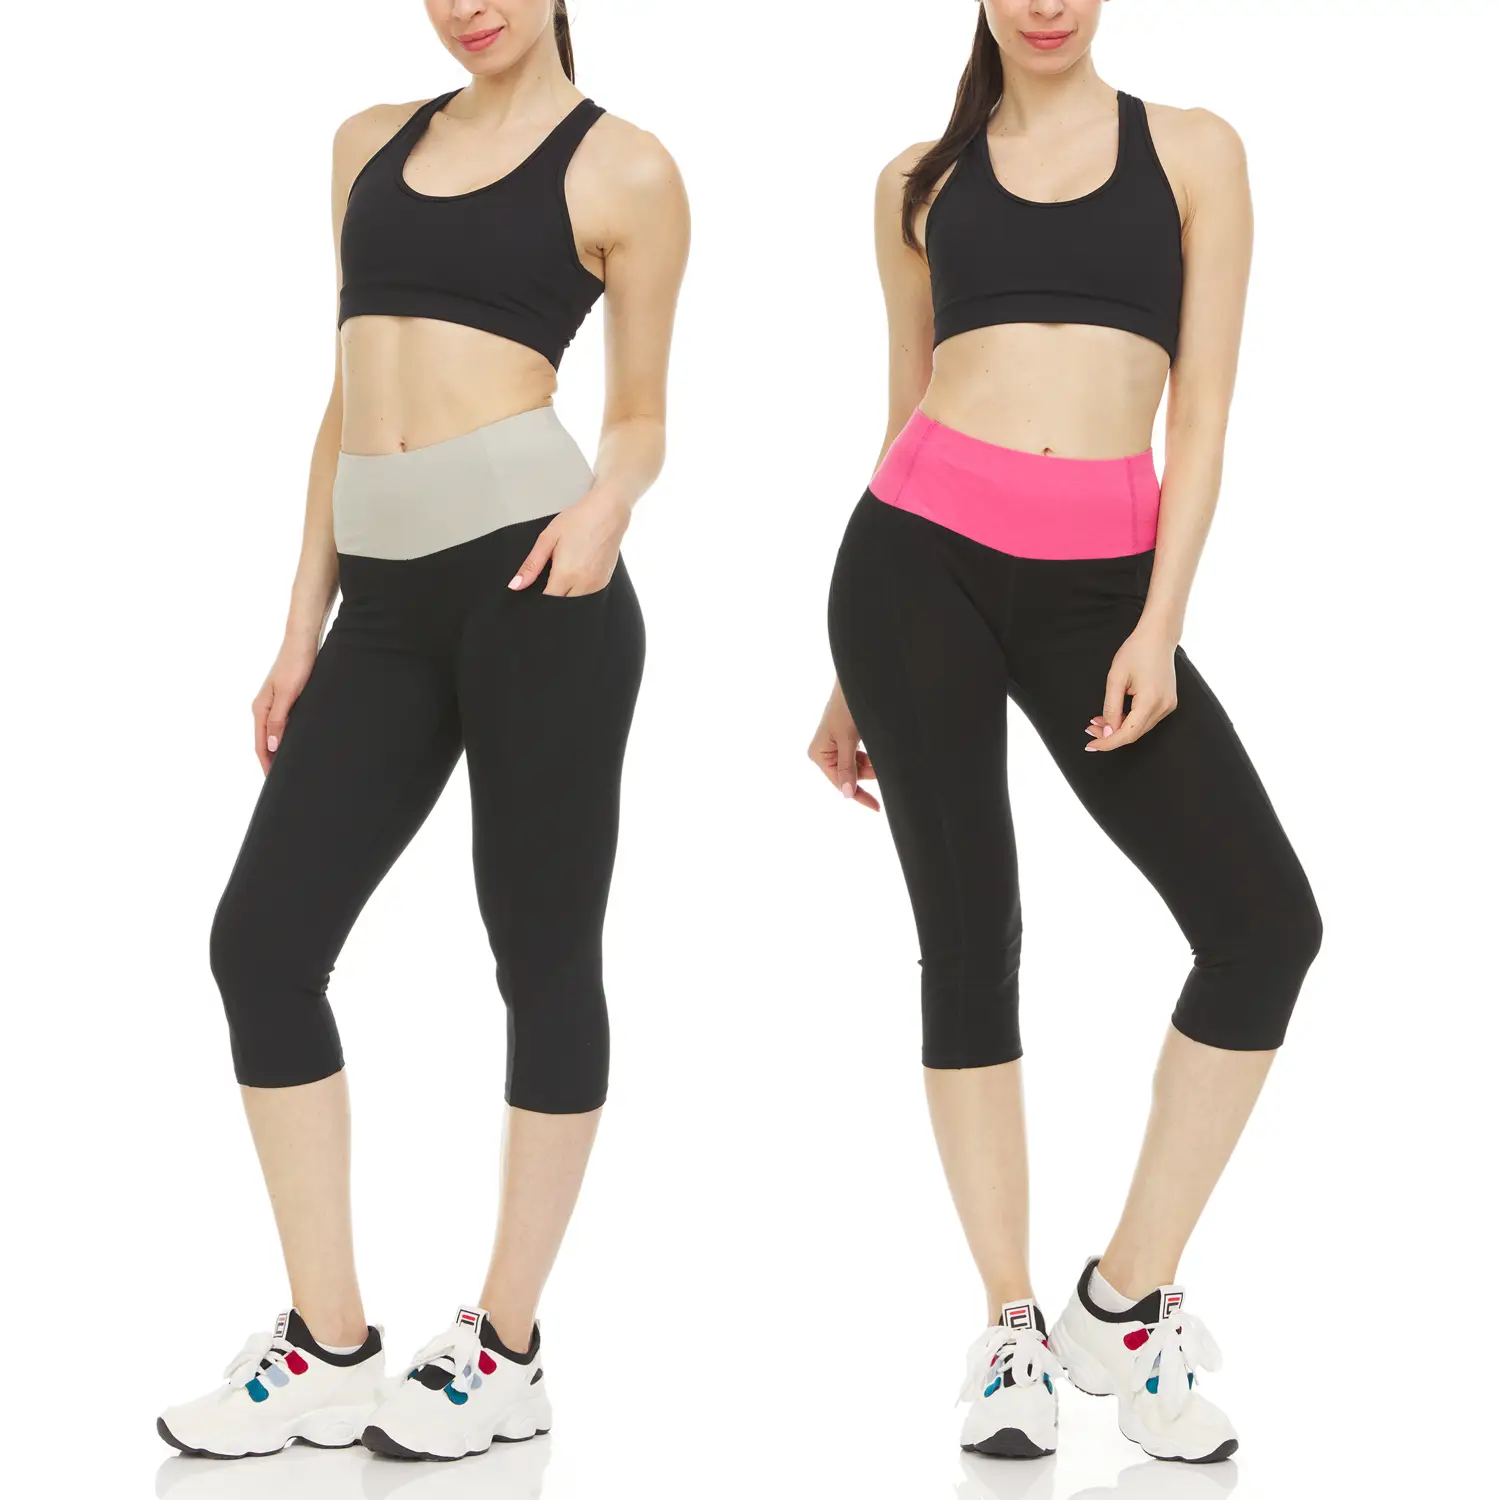 Women's Active Performance Yoga Stretch Capri Leggings Available in multi pack